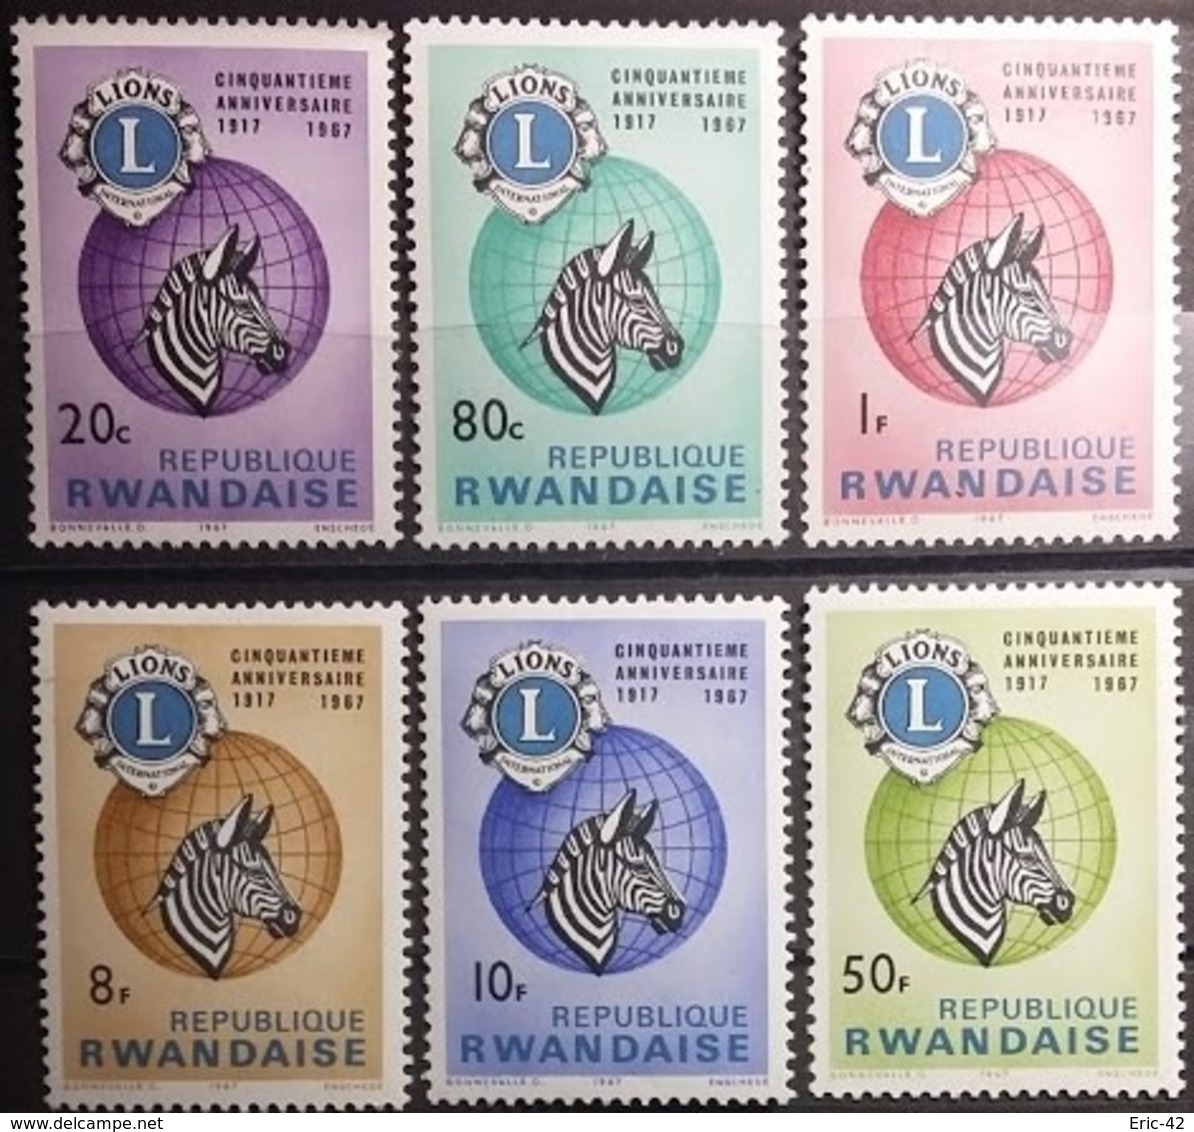 RWANDA - REPUBLIQUE RWANDAISE 1967 - 50 ANIVERSARIO DE LOS LEONES Yvert & Tellier Nº 227 / 232 Neuf* - Rotary, Lions Club